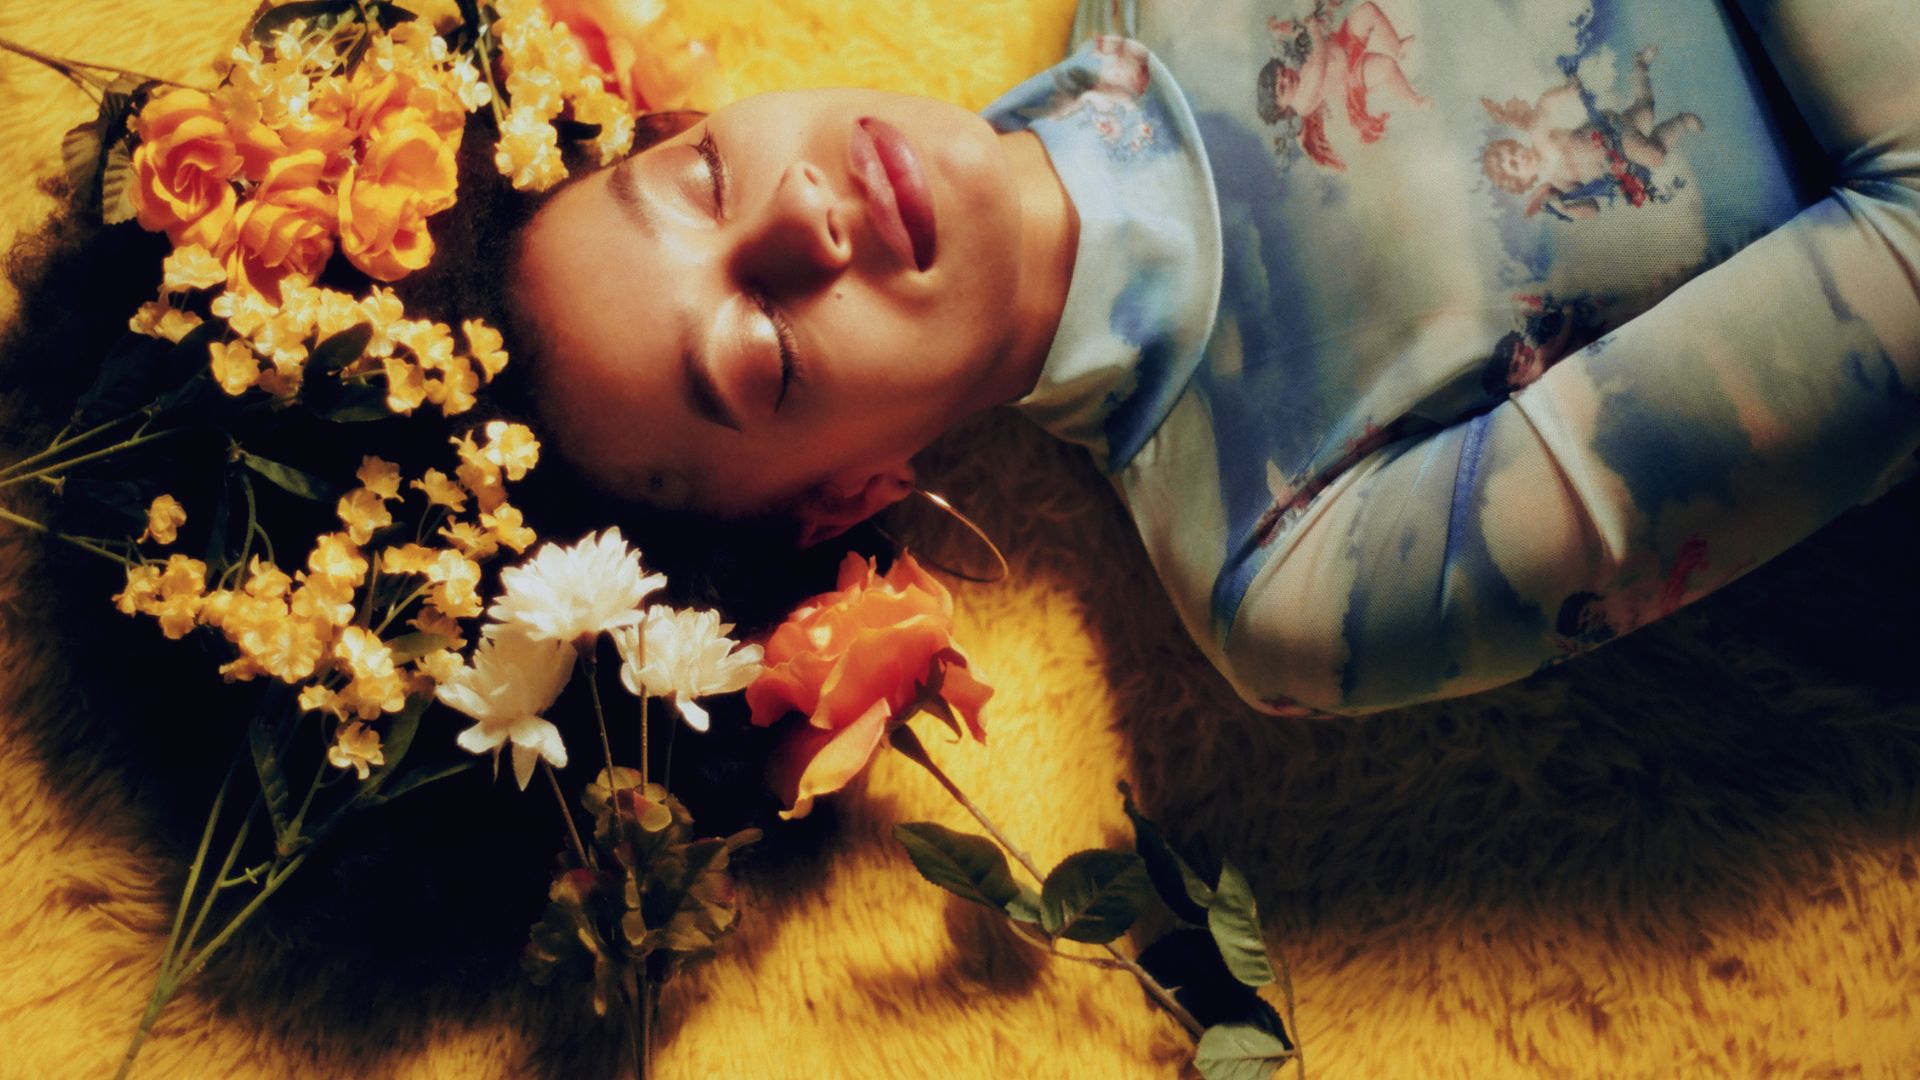 August Lee Stevens lying down with flowers in her hair